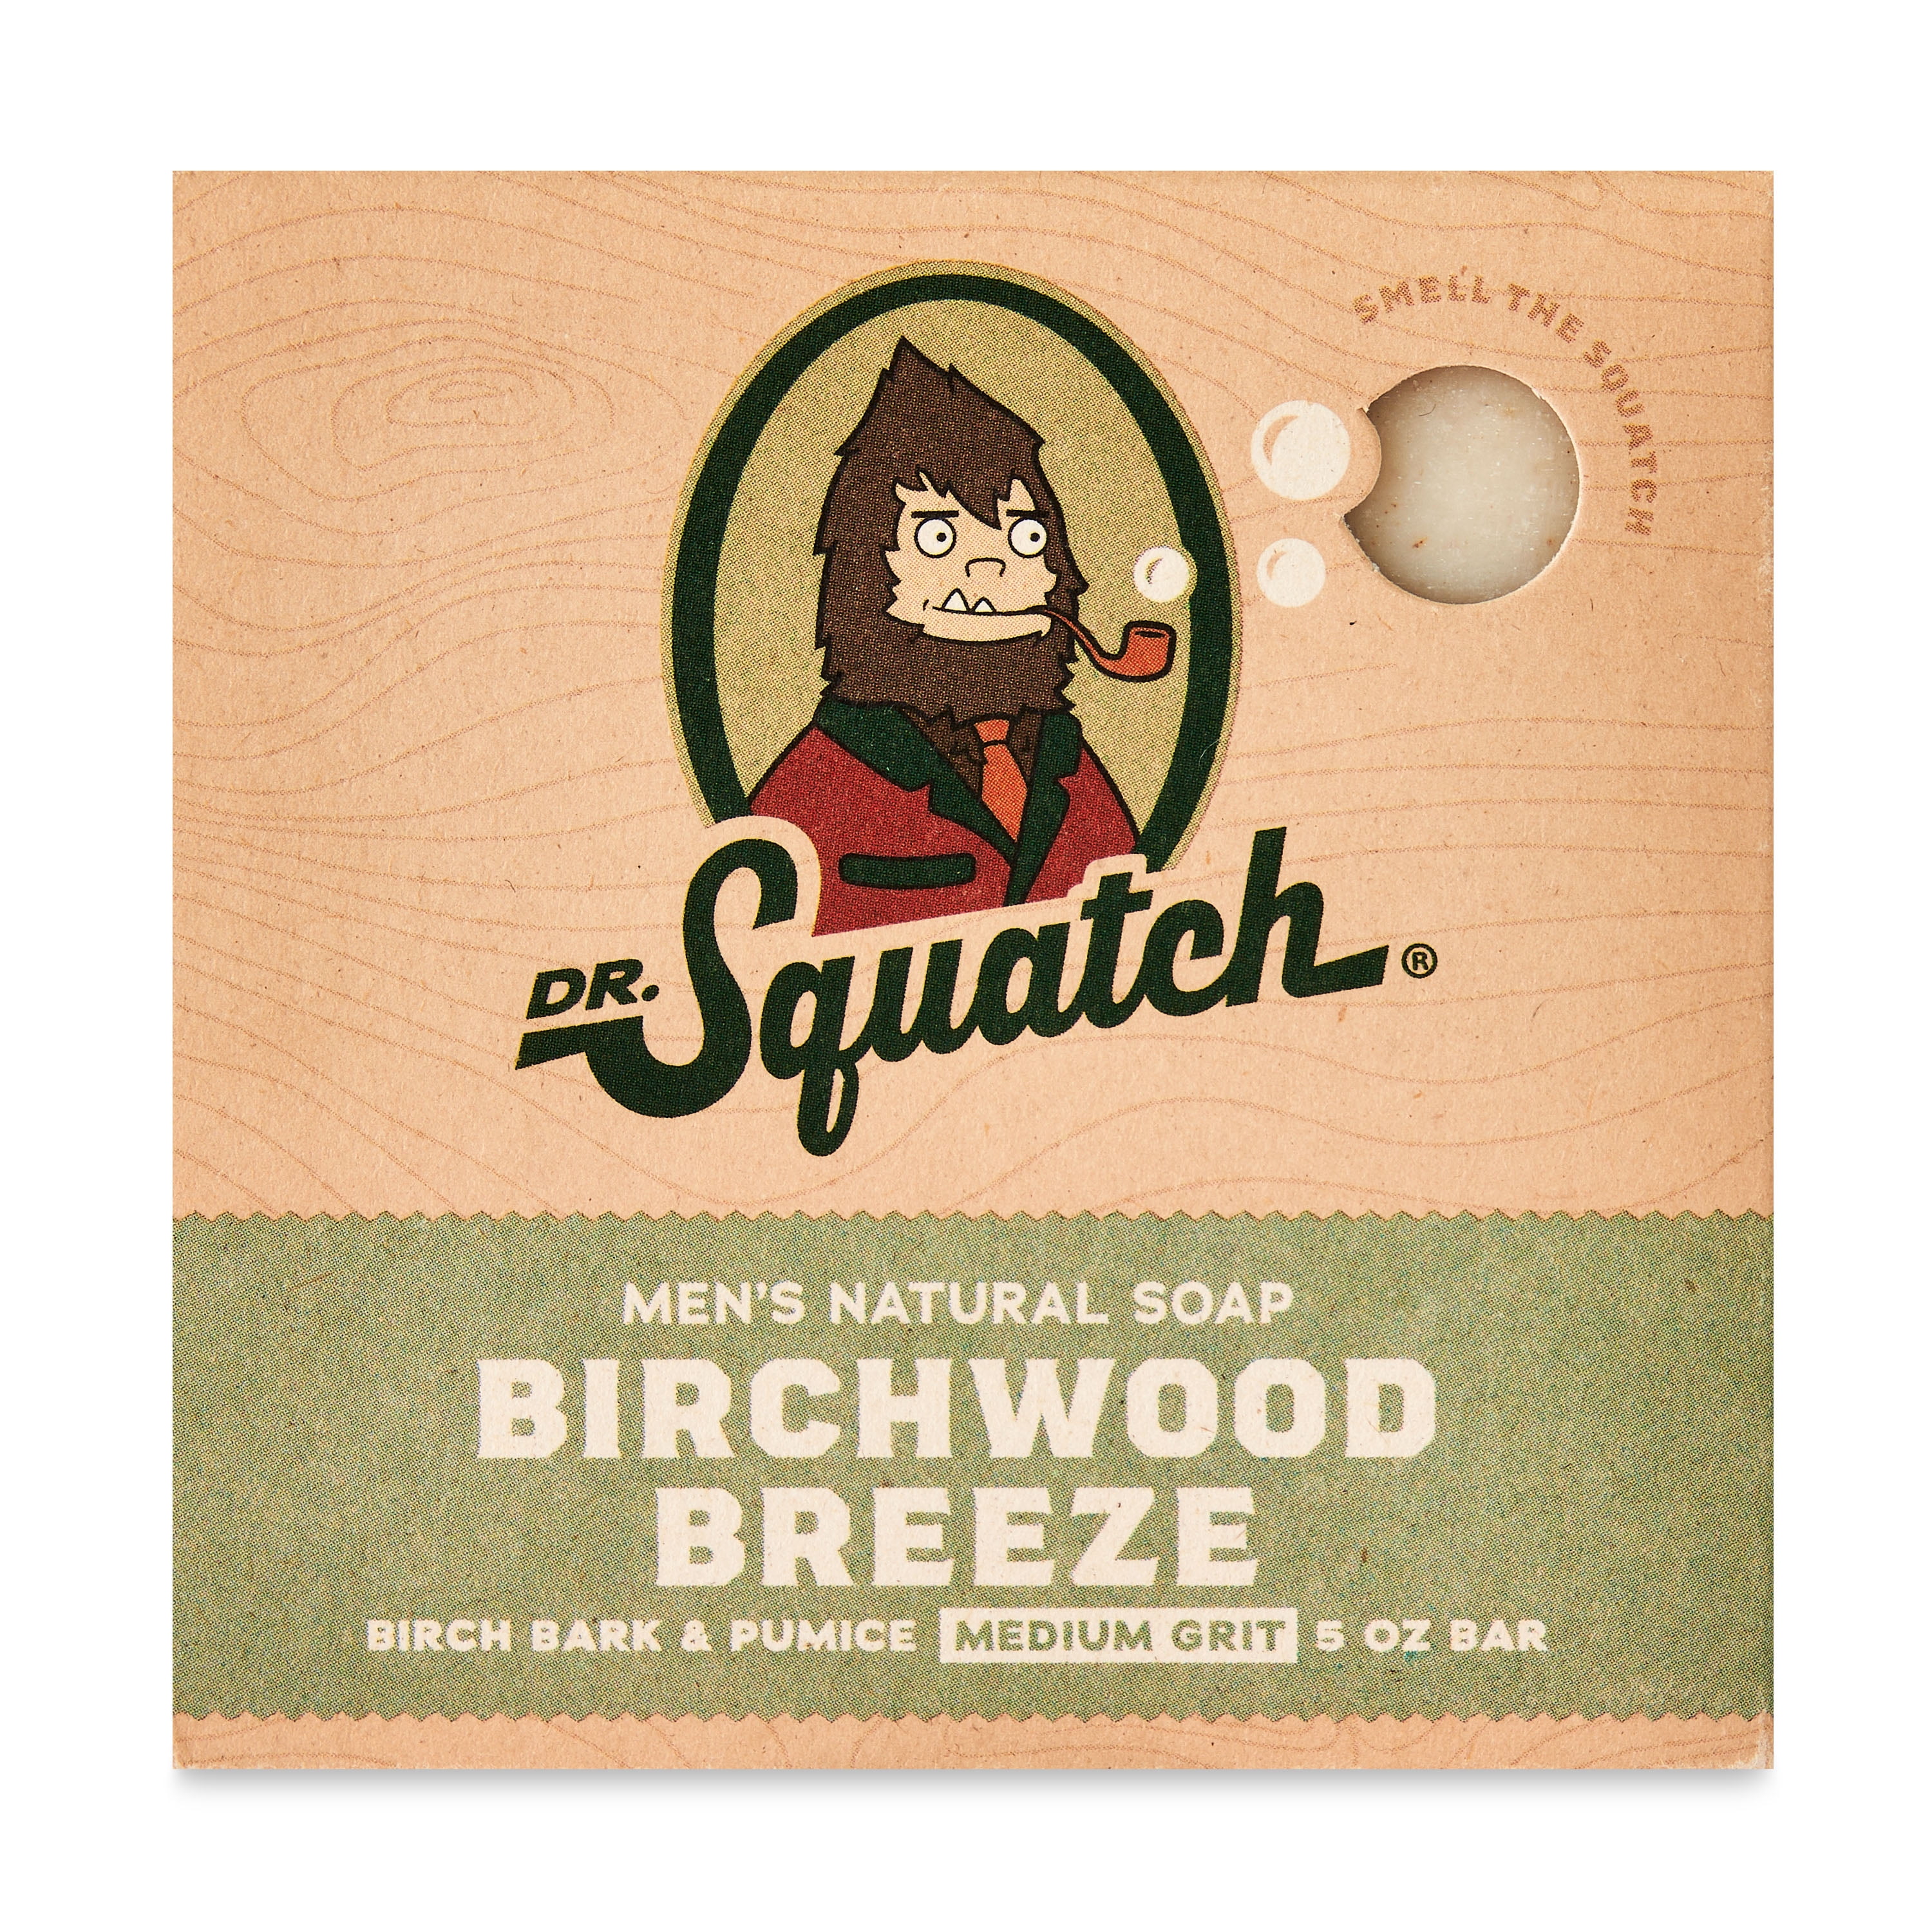 Dr . SQUATCH MEN'S NATURAL SOAP BIRCHWOOD BREEZE 5 OZ. NEW IN BOX UNUSED